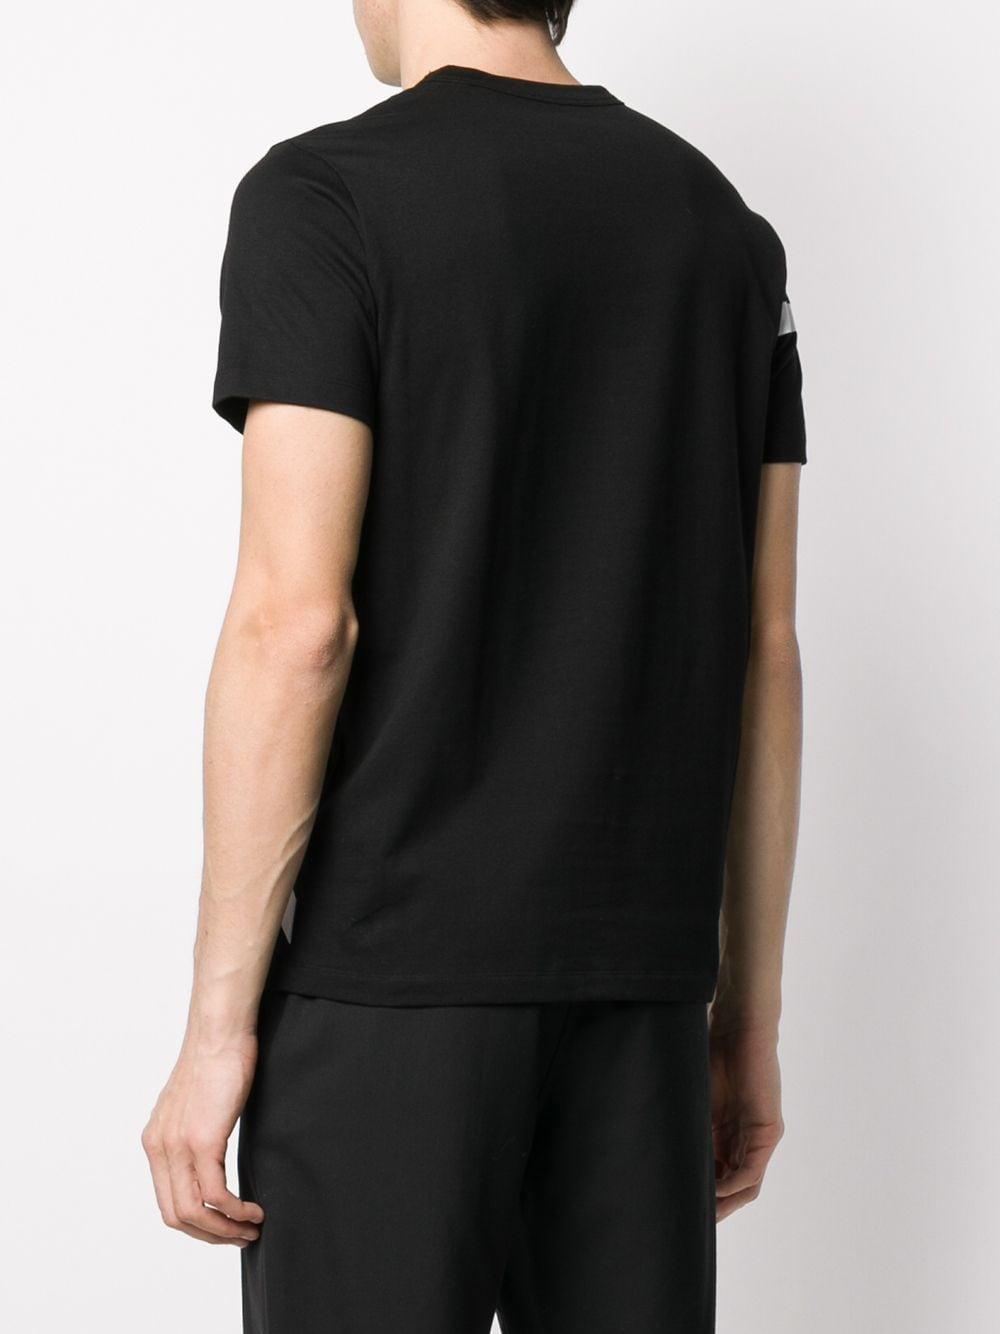 Moncler Cotton Logo Print T-shirt in Black for Men - Save 32% - Lyst